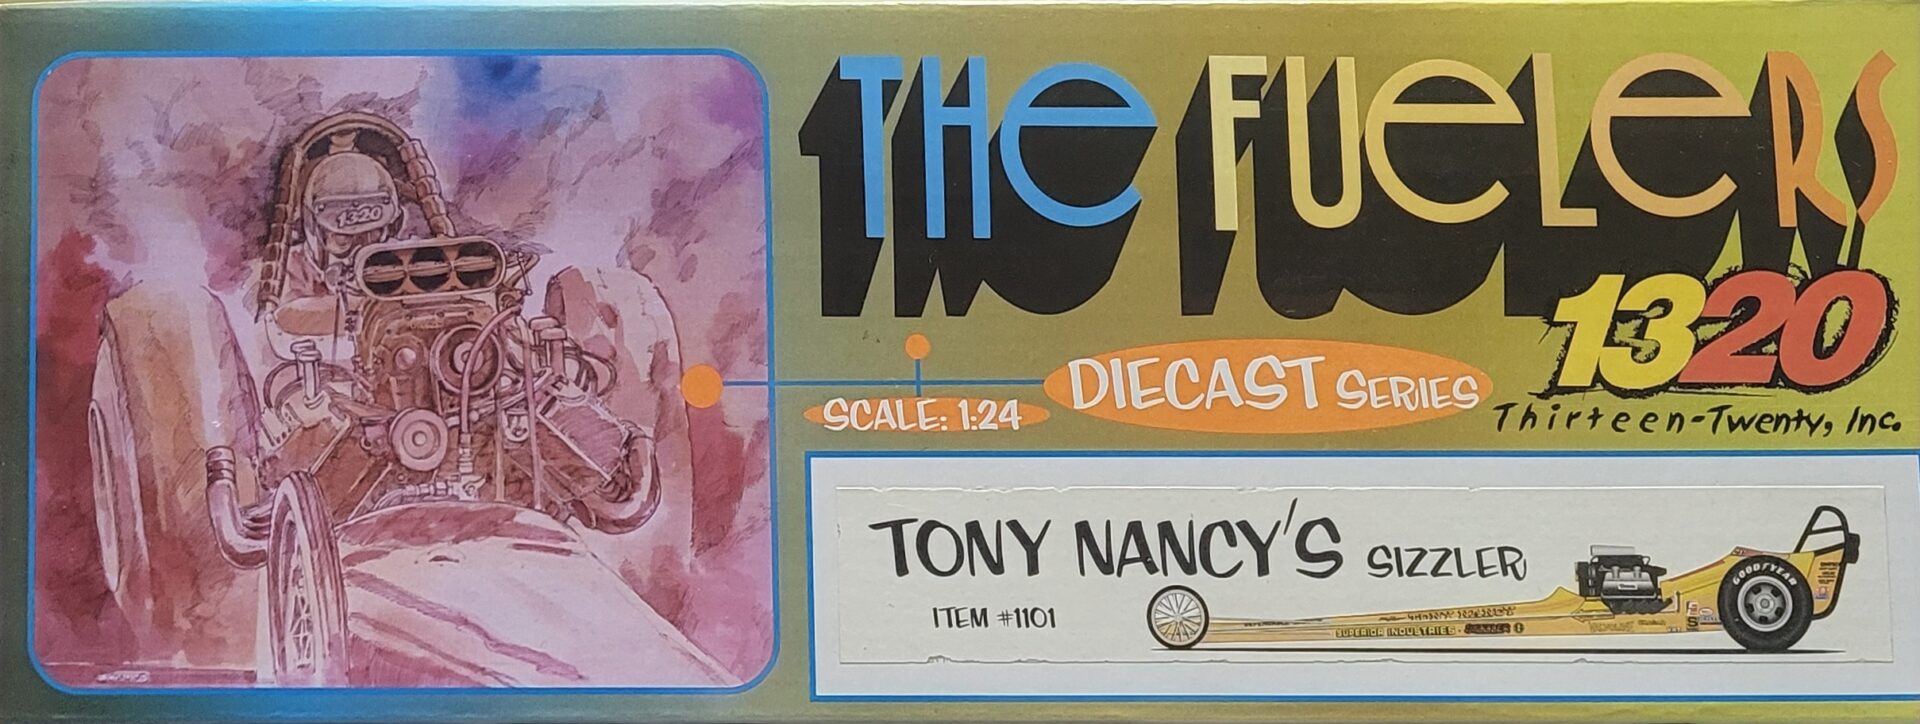 Tony Nancy's 'the fueler' cd.